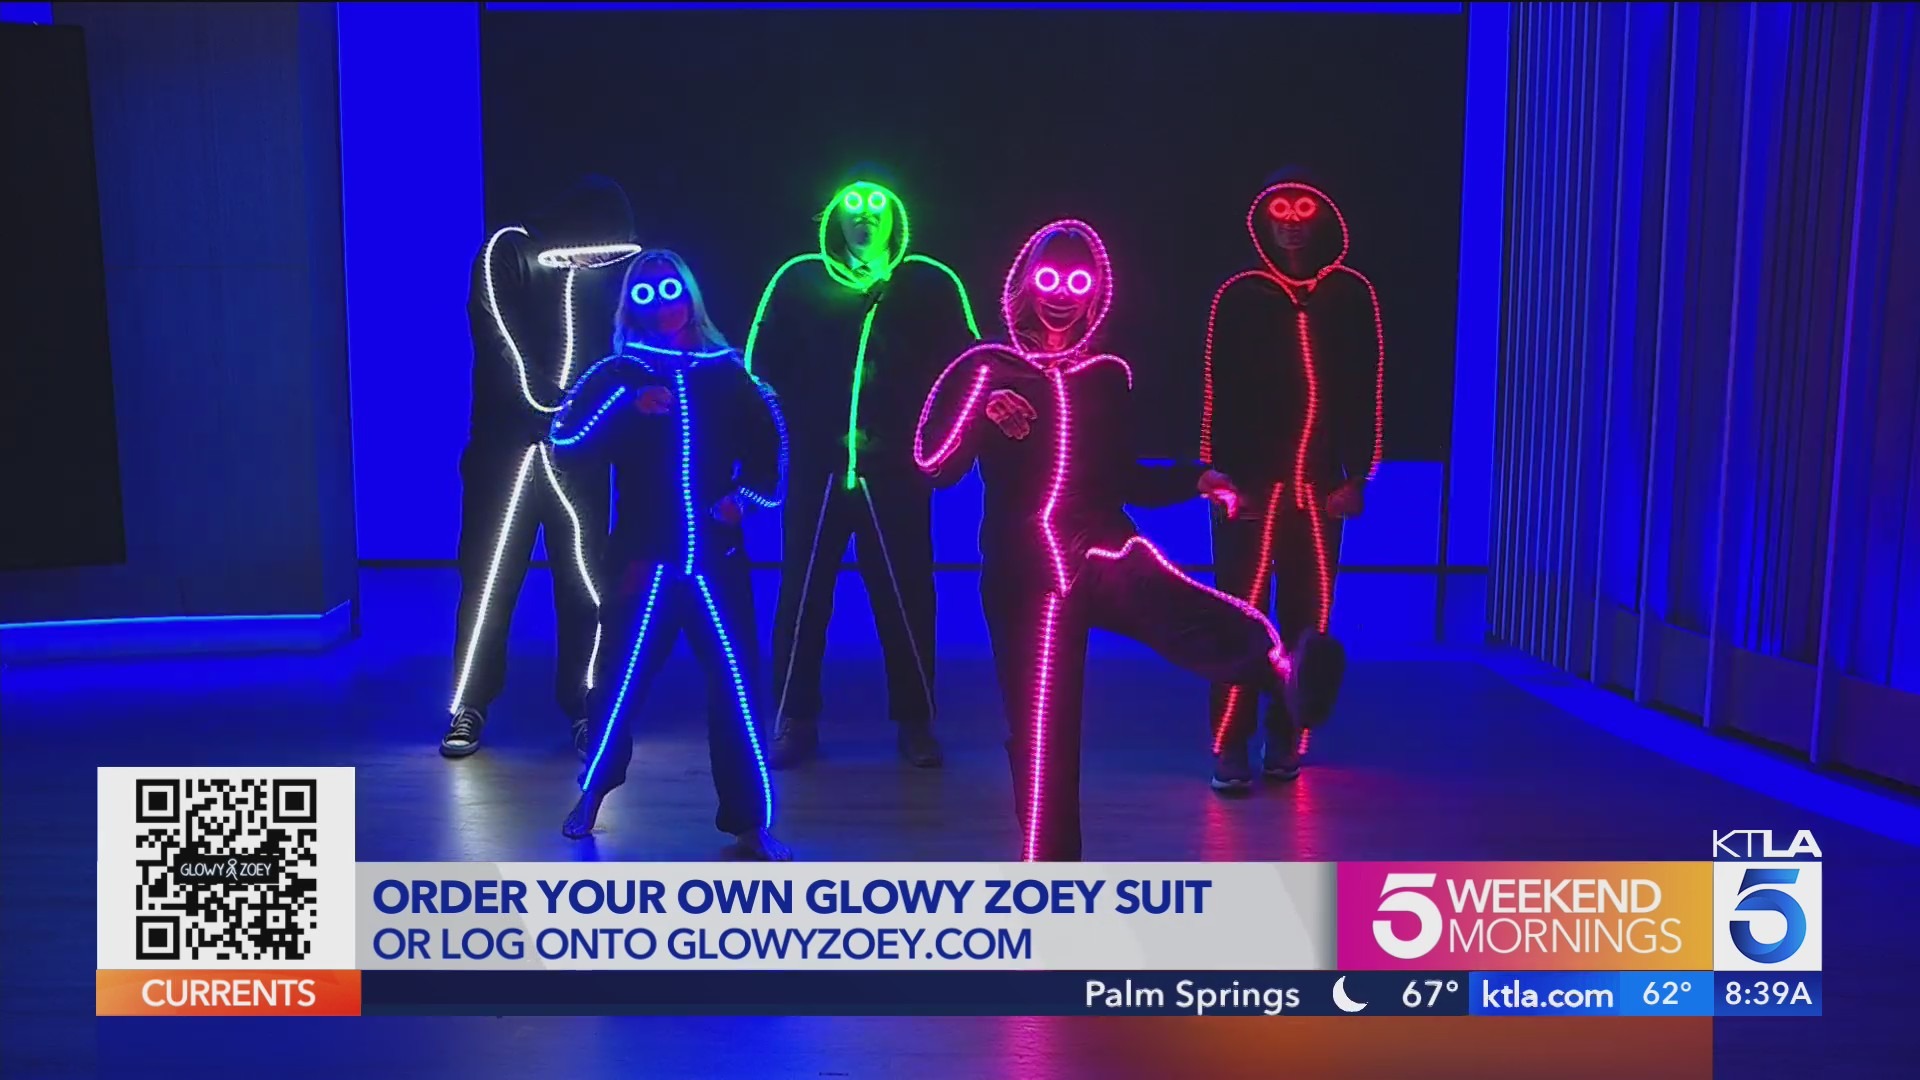 Glowy Zoey suits light up KTLA Weekend Morning News